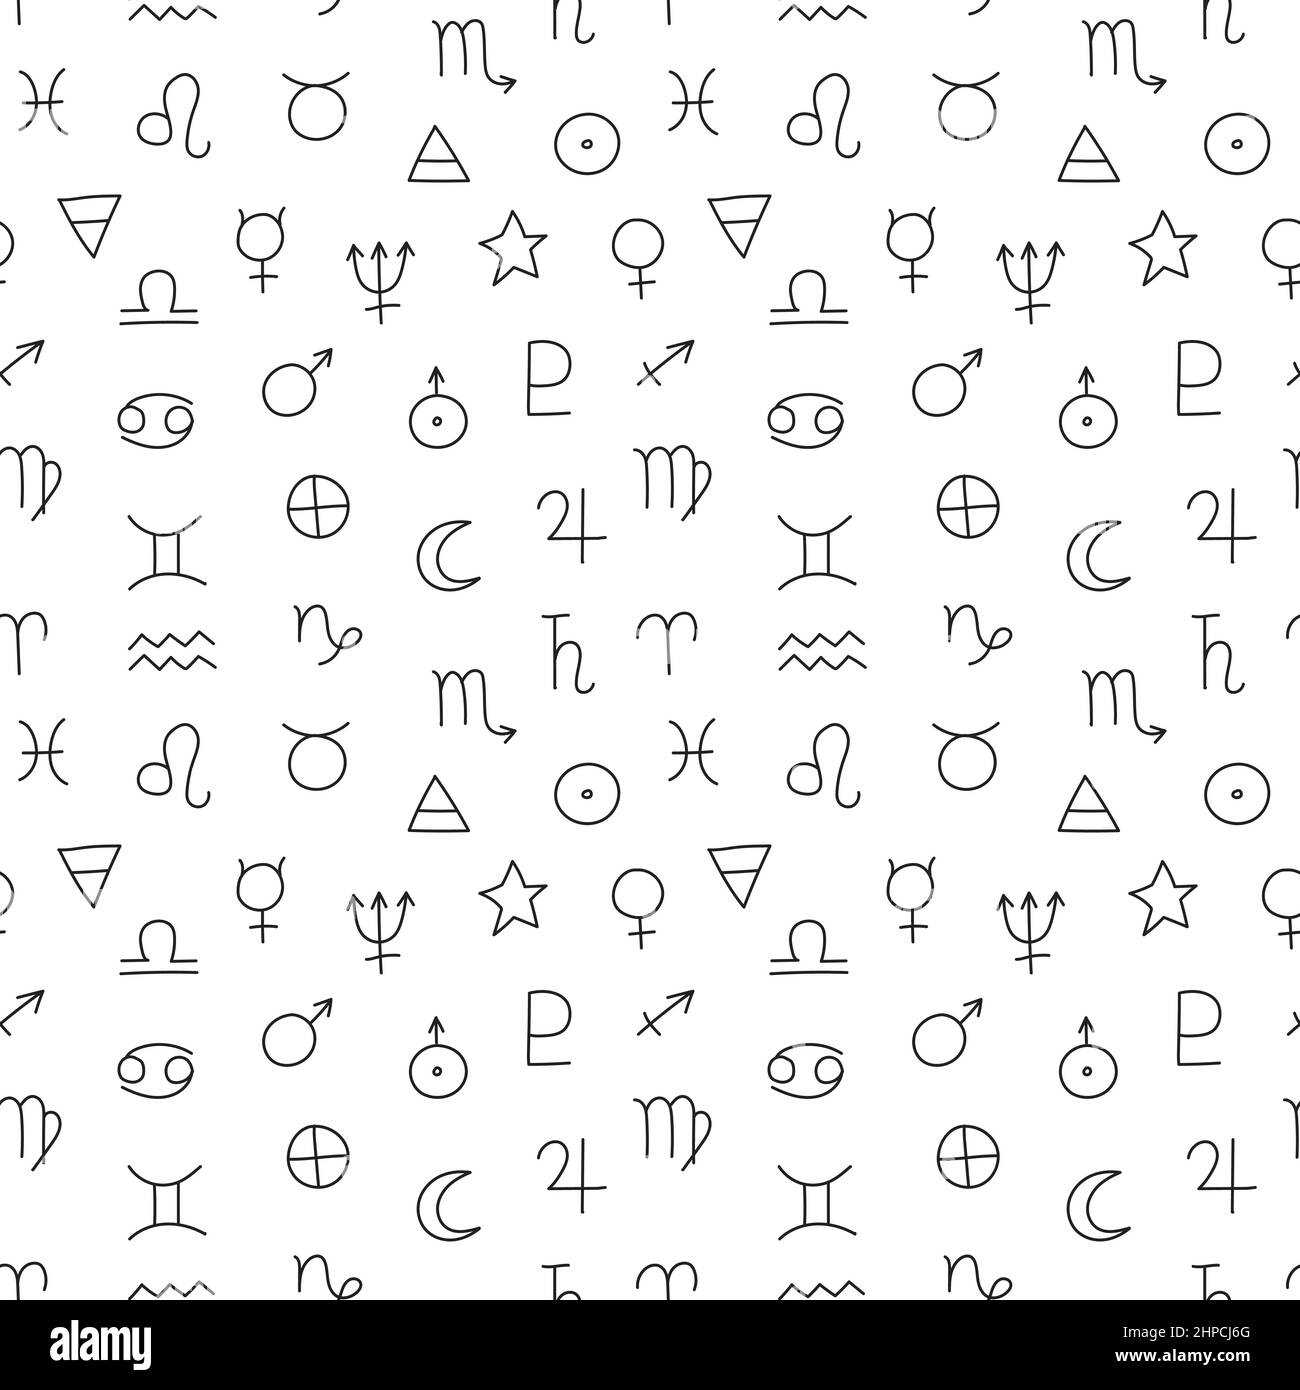 Zodiac sign seamless pattern. Black symbols on white background. Stock Vector